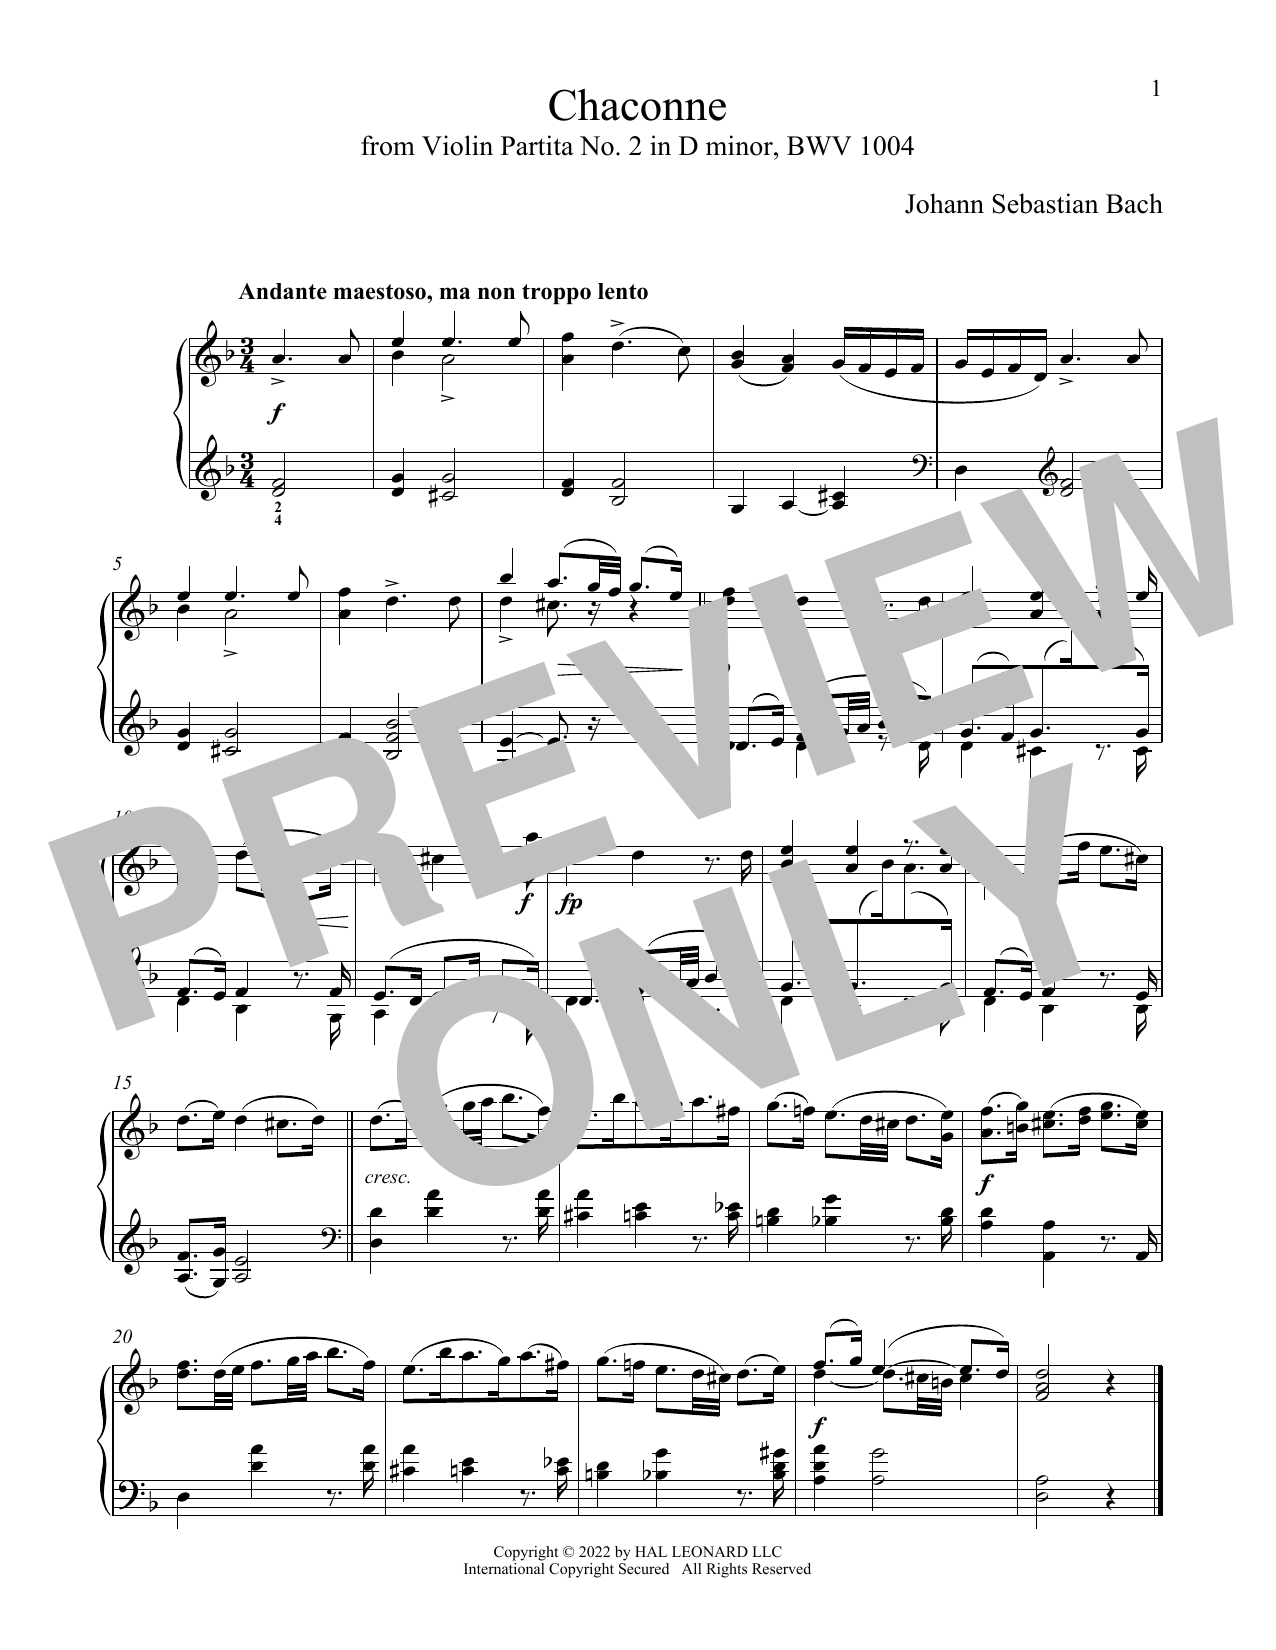 Johann Sebastian Bach Chaconne (Theme), BWV 1004 Sheet Music Notes & Chords for Piano Solo - Download or Print PDF